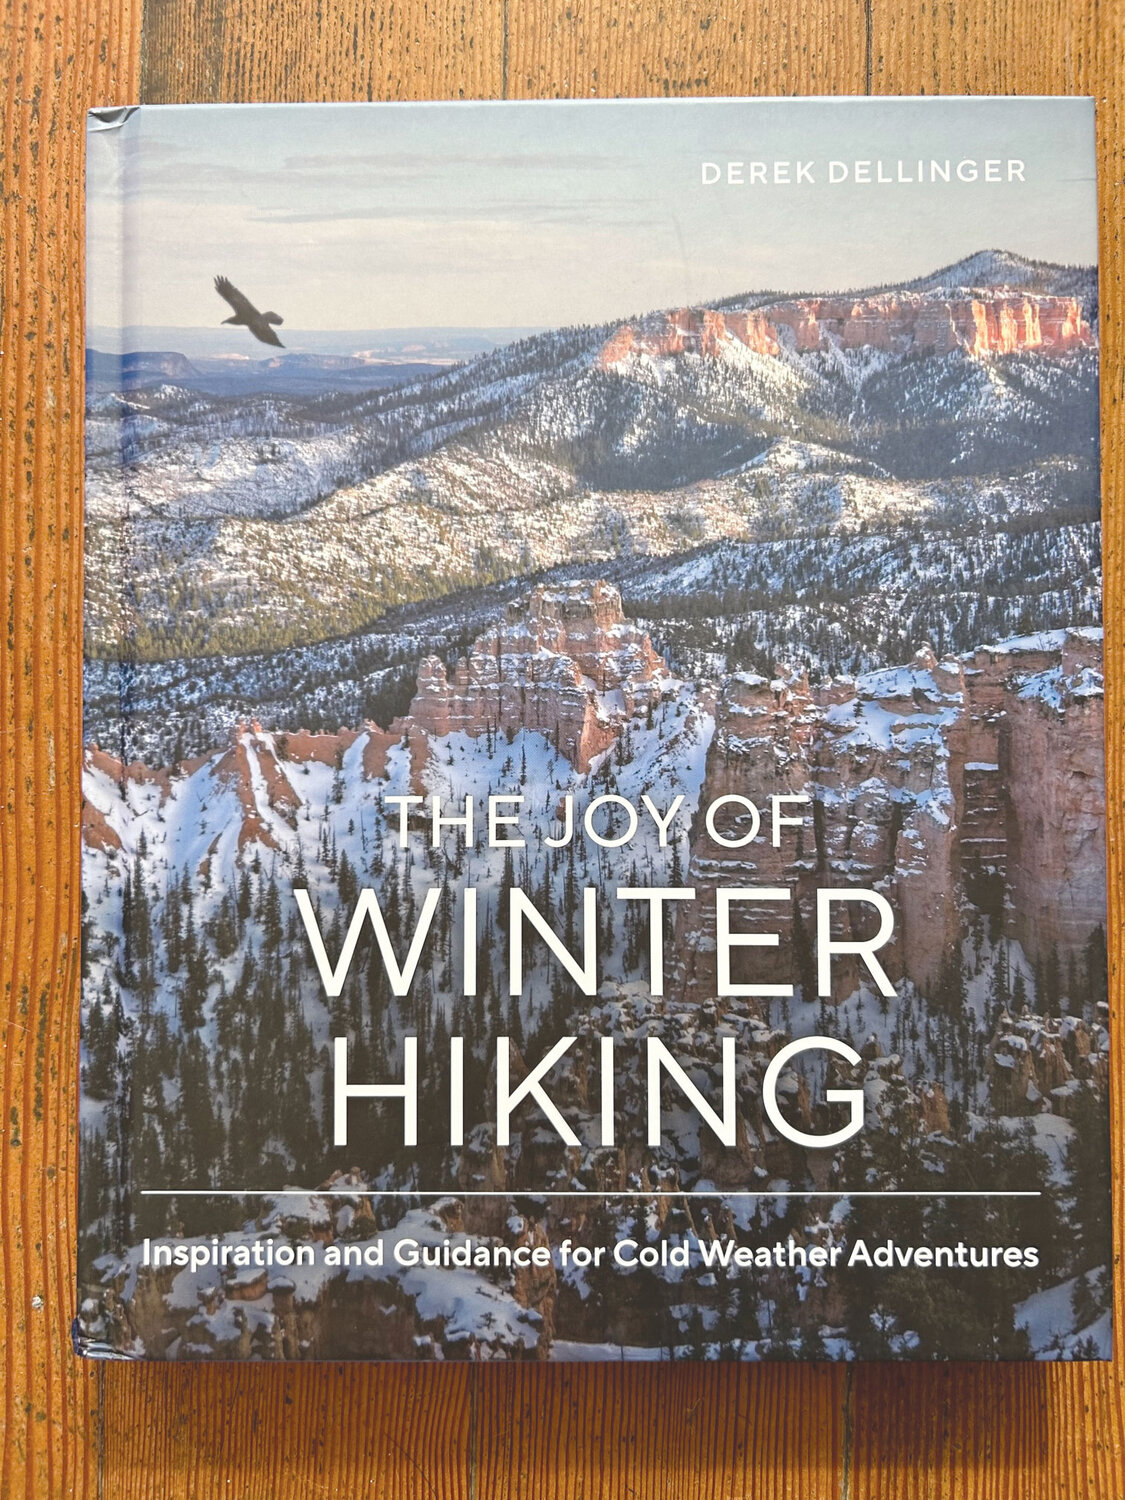 "The Joy of Winter Hiking" by Derek Dellinger